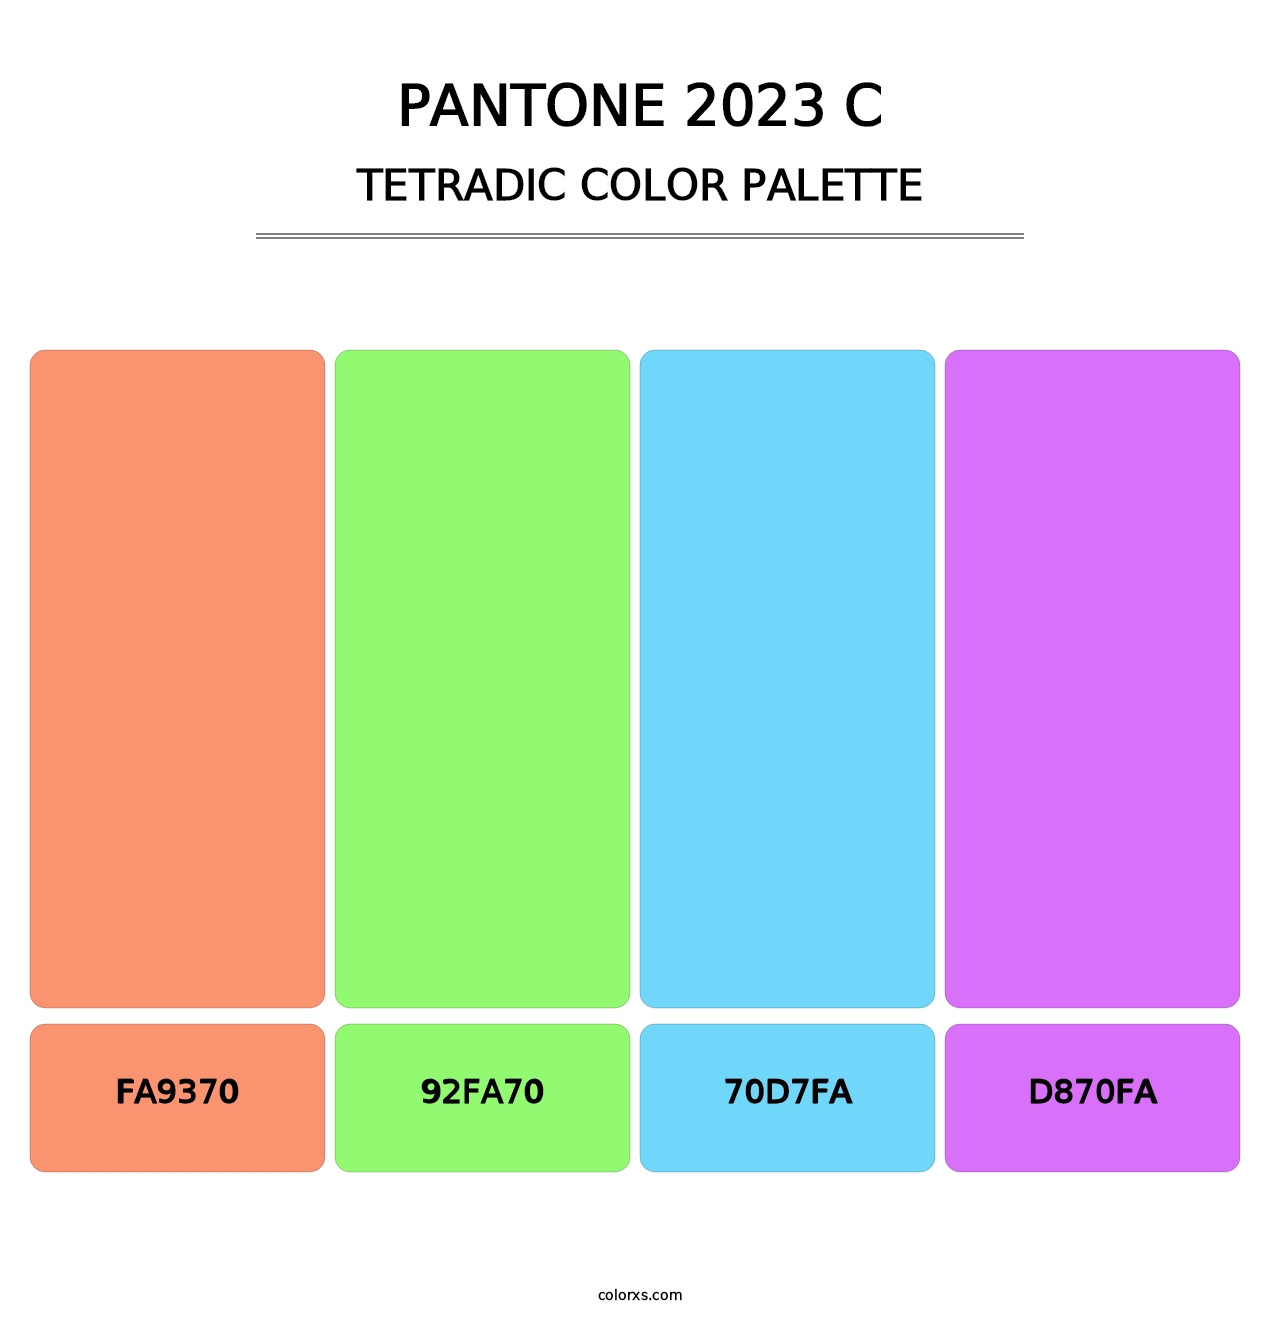 PANTONE 2023 C - Tetradic Color Palette